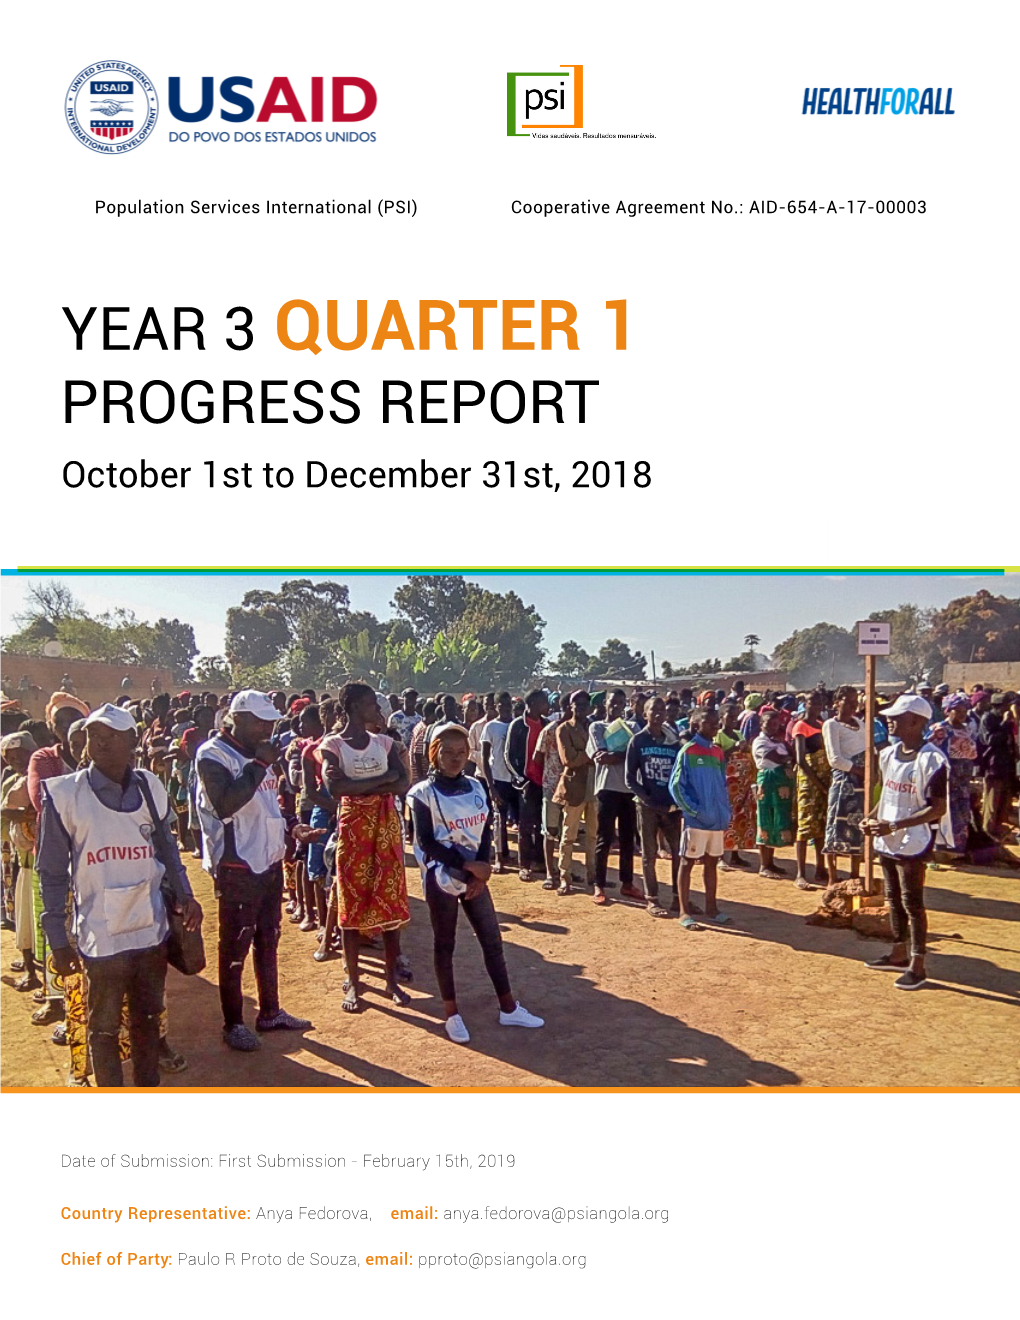 YEAR 3 QUARTER 1 PROGRESS REPORT October 1St to December 31St, 2018